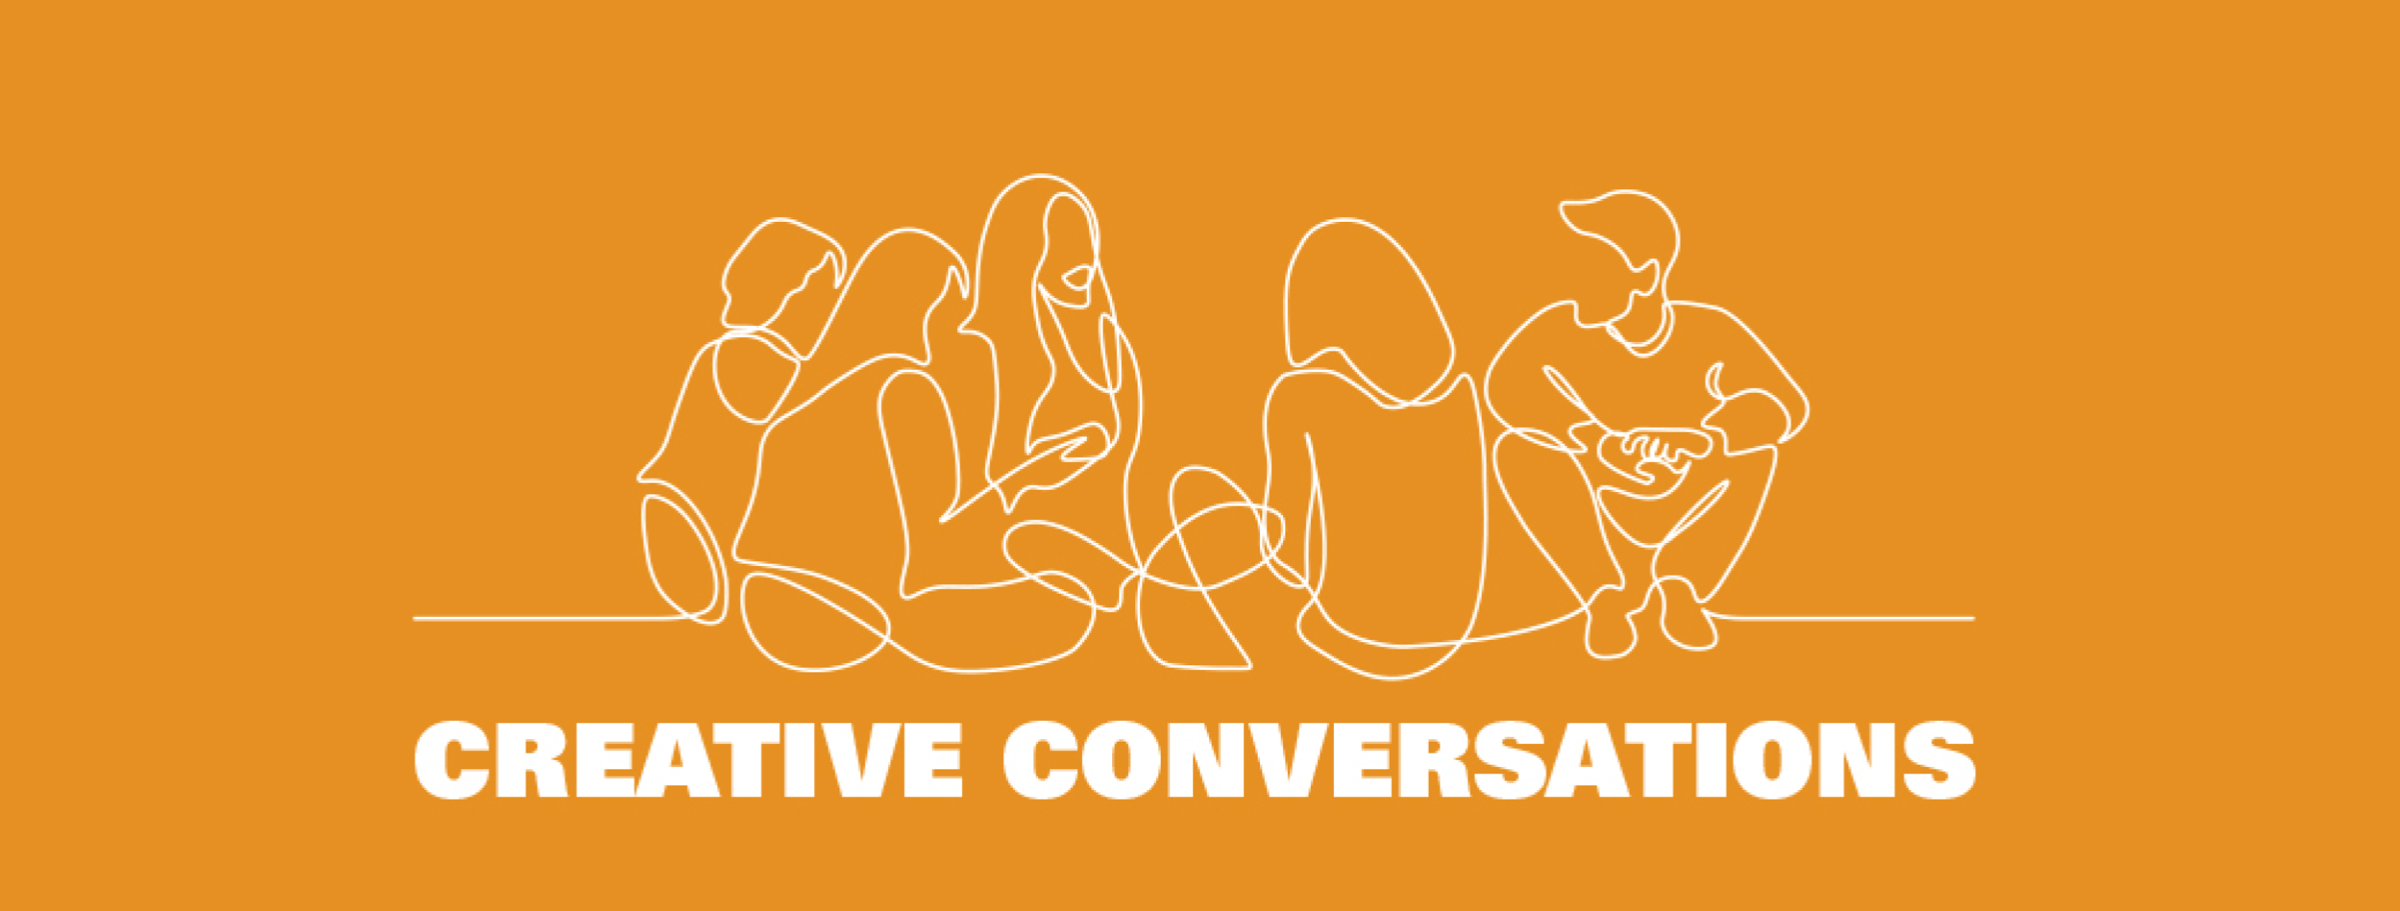 Creative Conversations Graphic